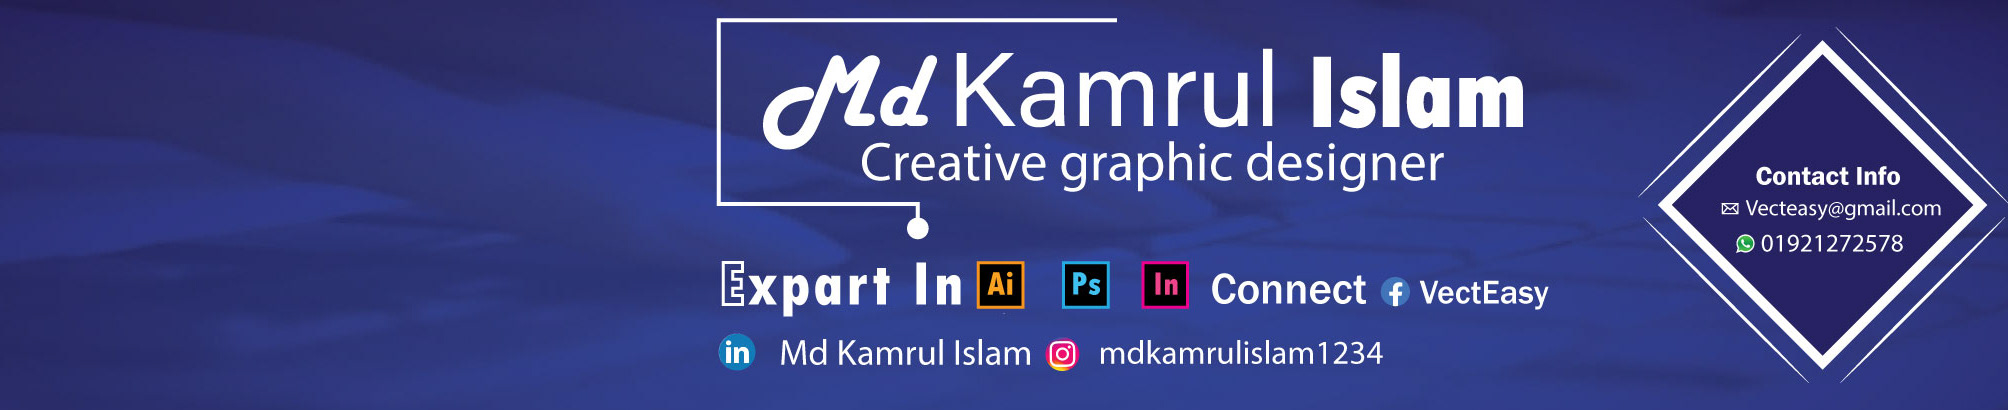 Profielbanner van MD KAMRUL ISLAM